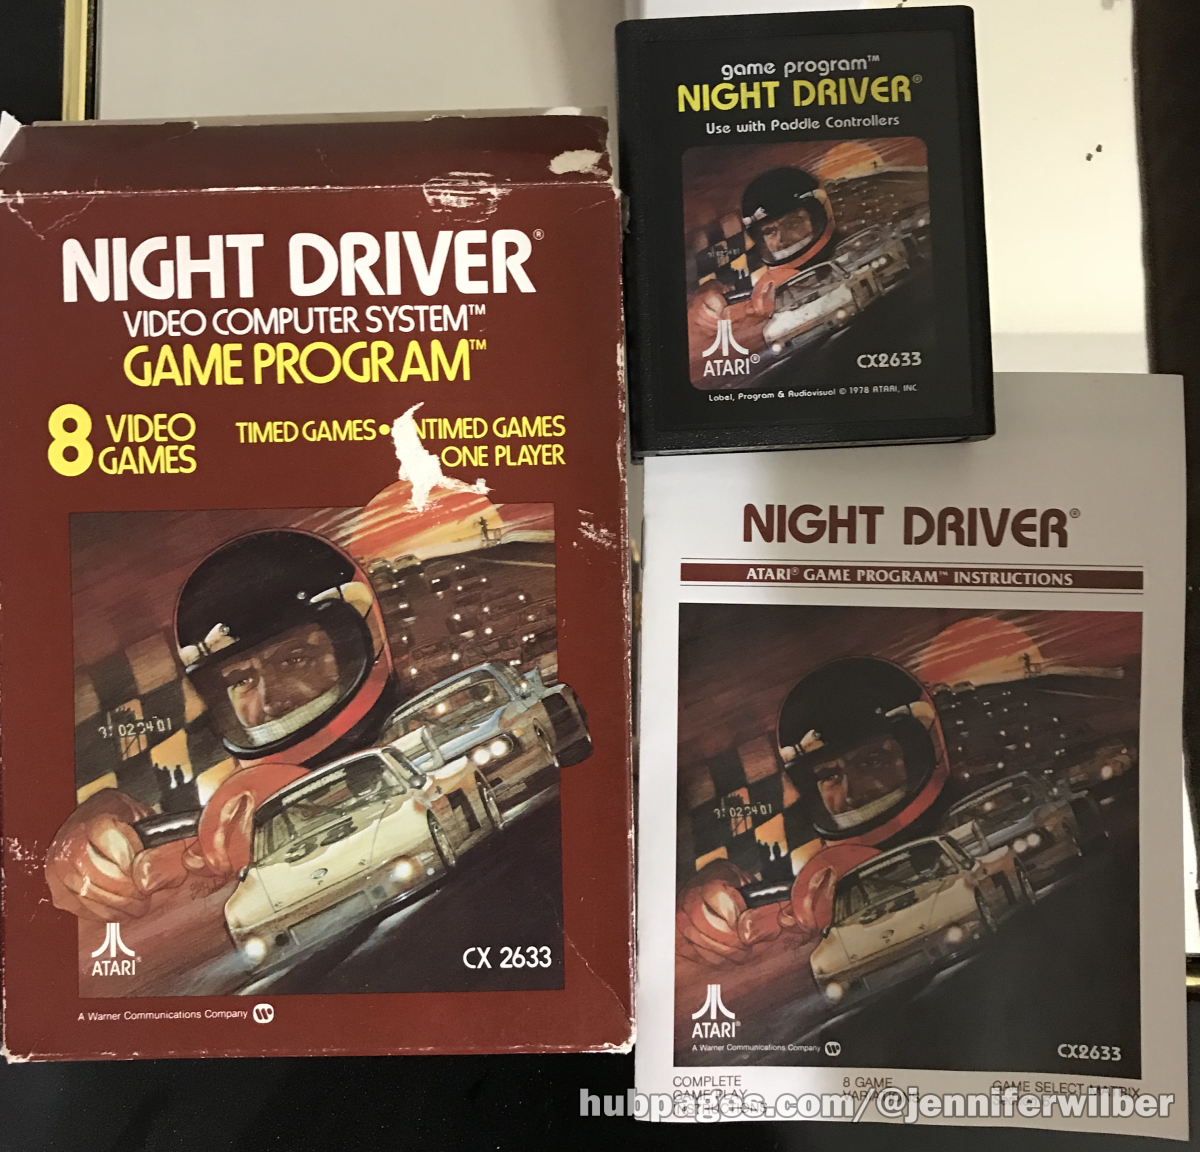 The Night Driver Atari 2600 cart, along with the original box and manual. 